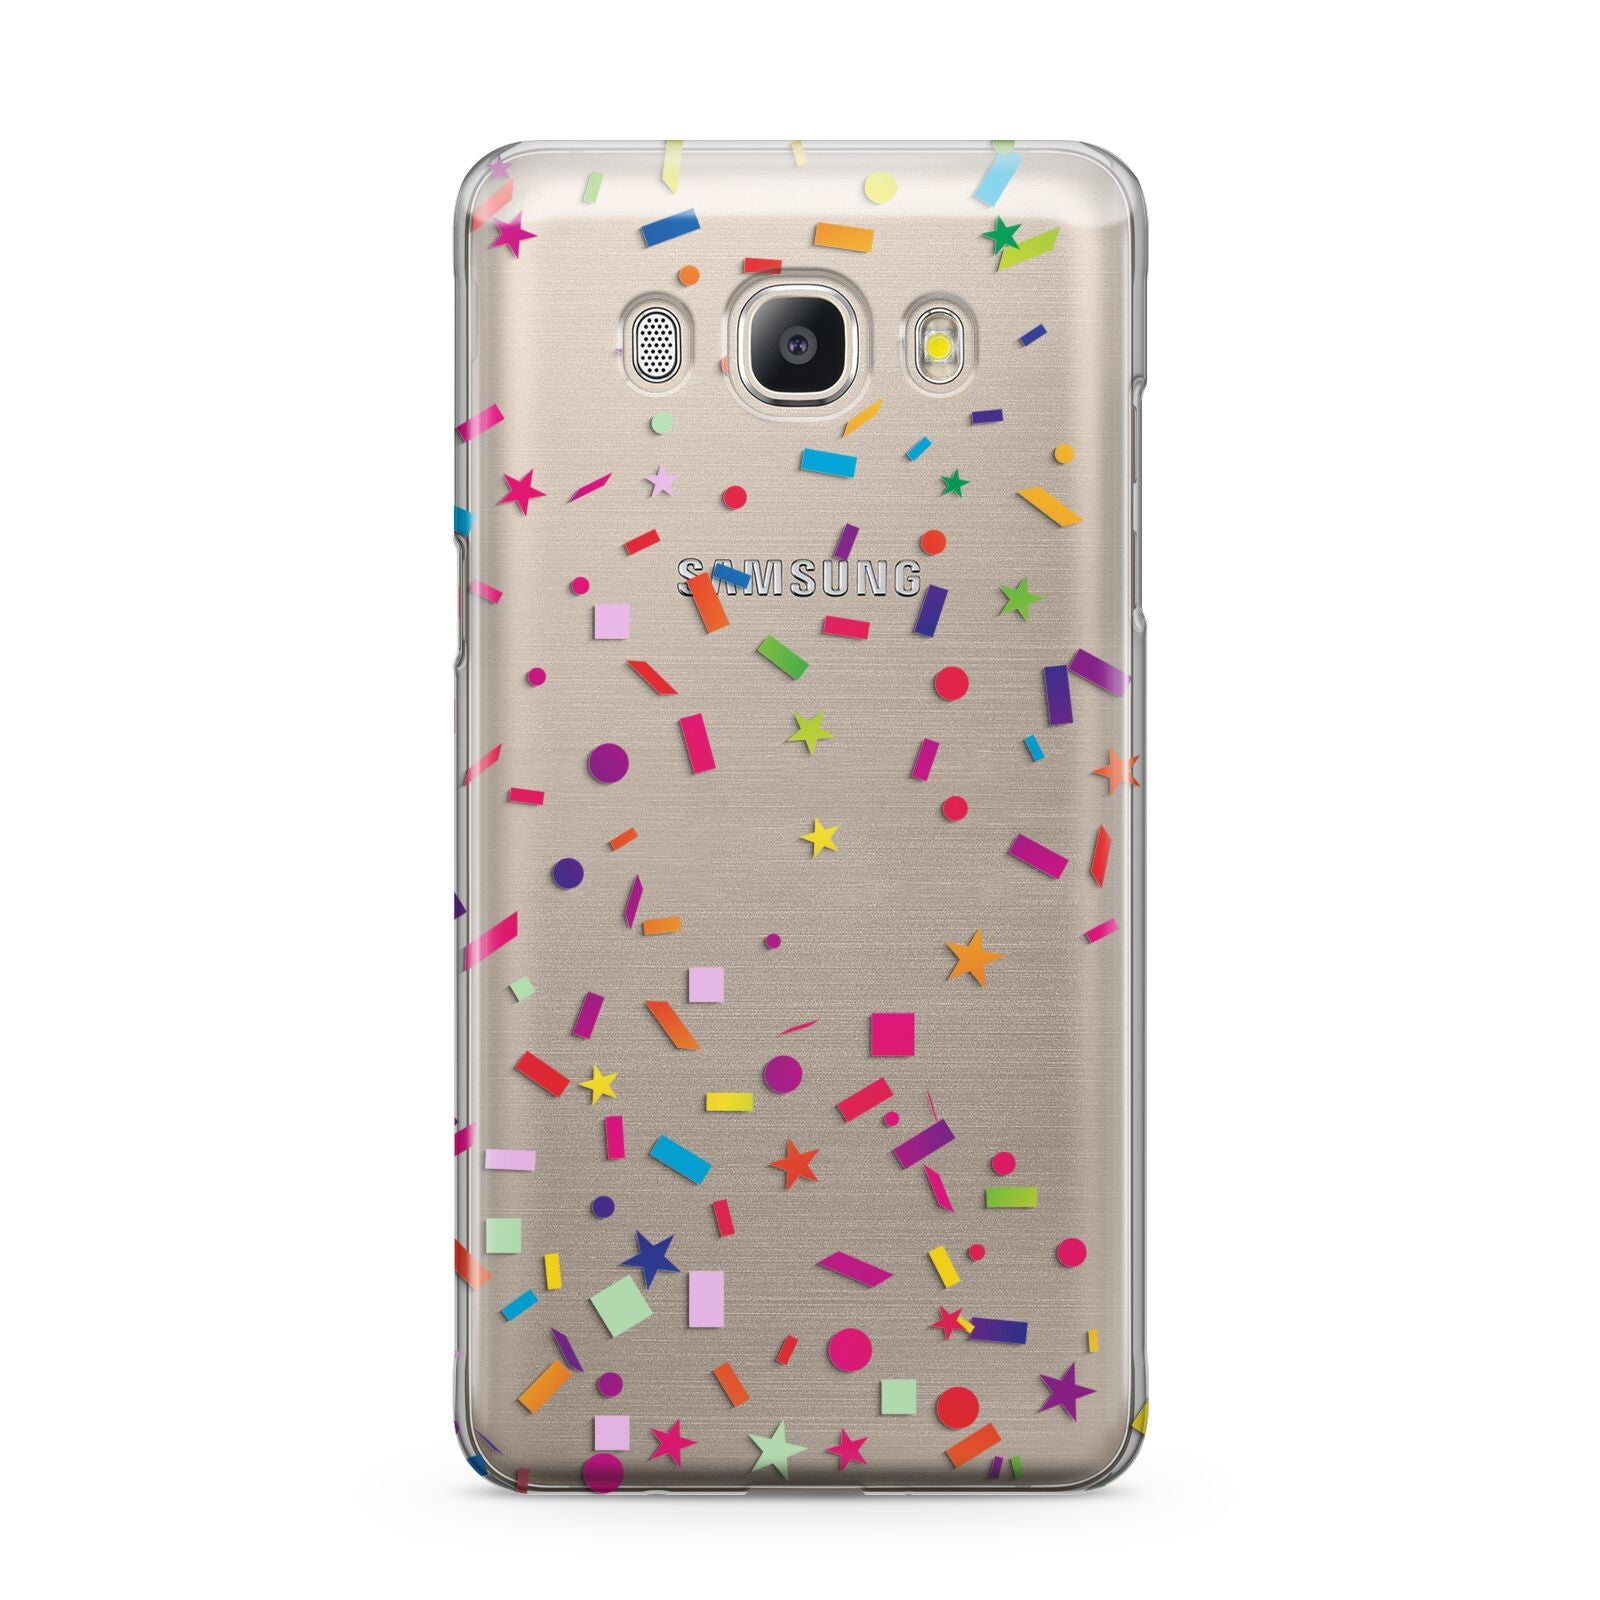 Confetti Samsung Galaxy J5 2016 Case